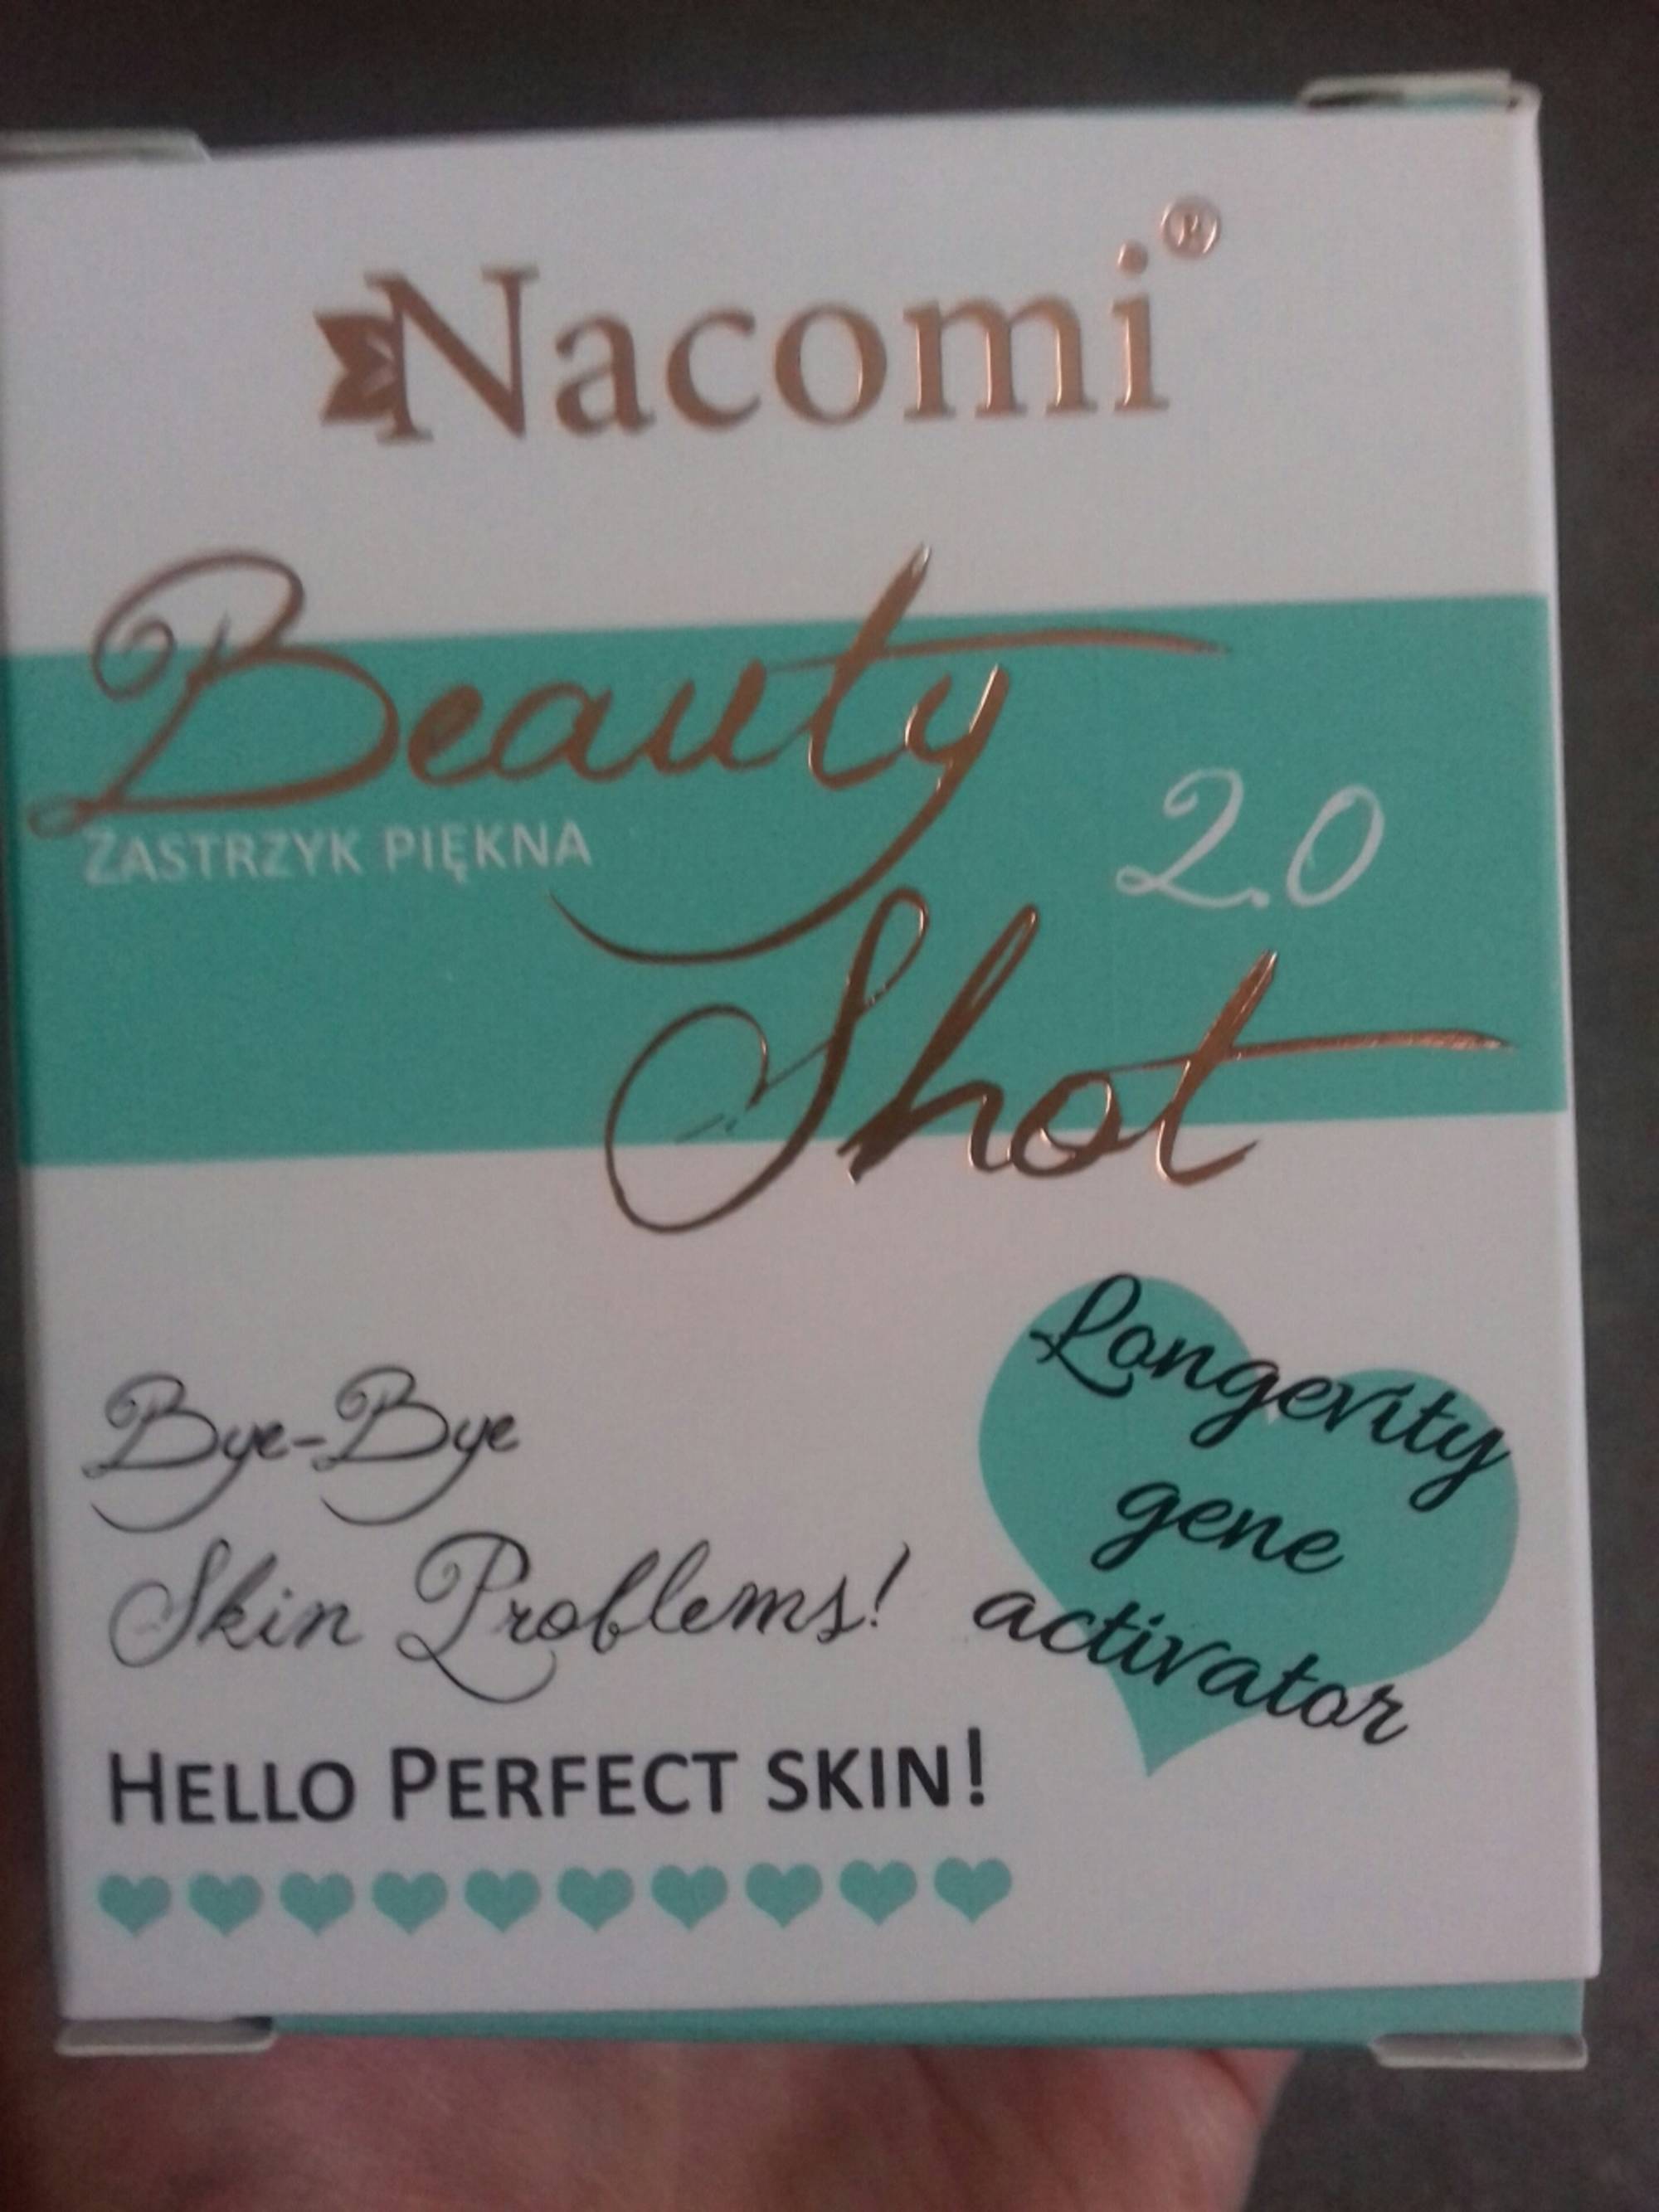 NACOMI - Beauty shot - Bye-Bye Skin Problems! 